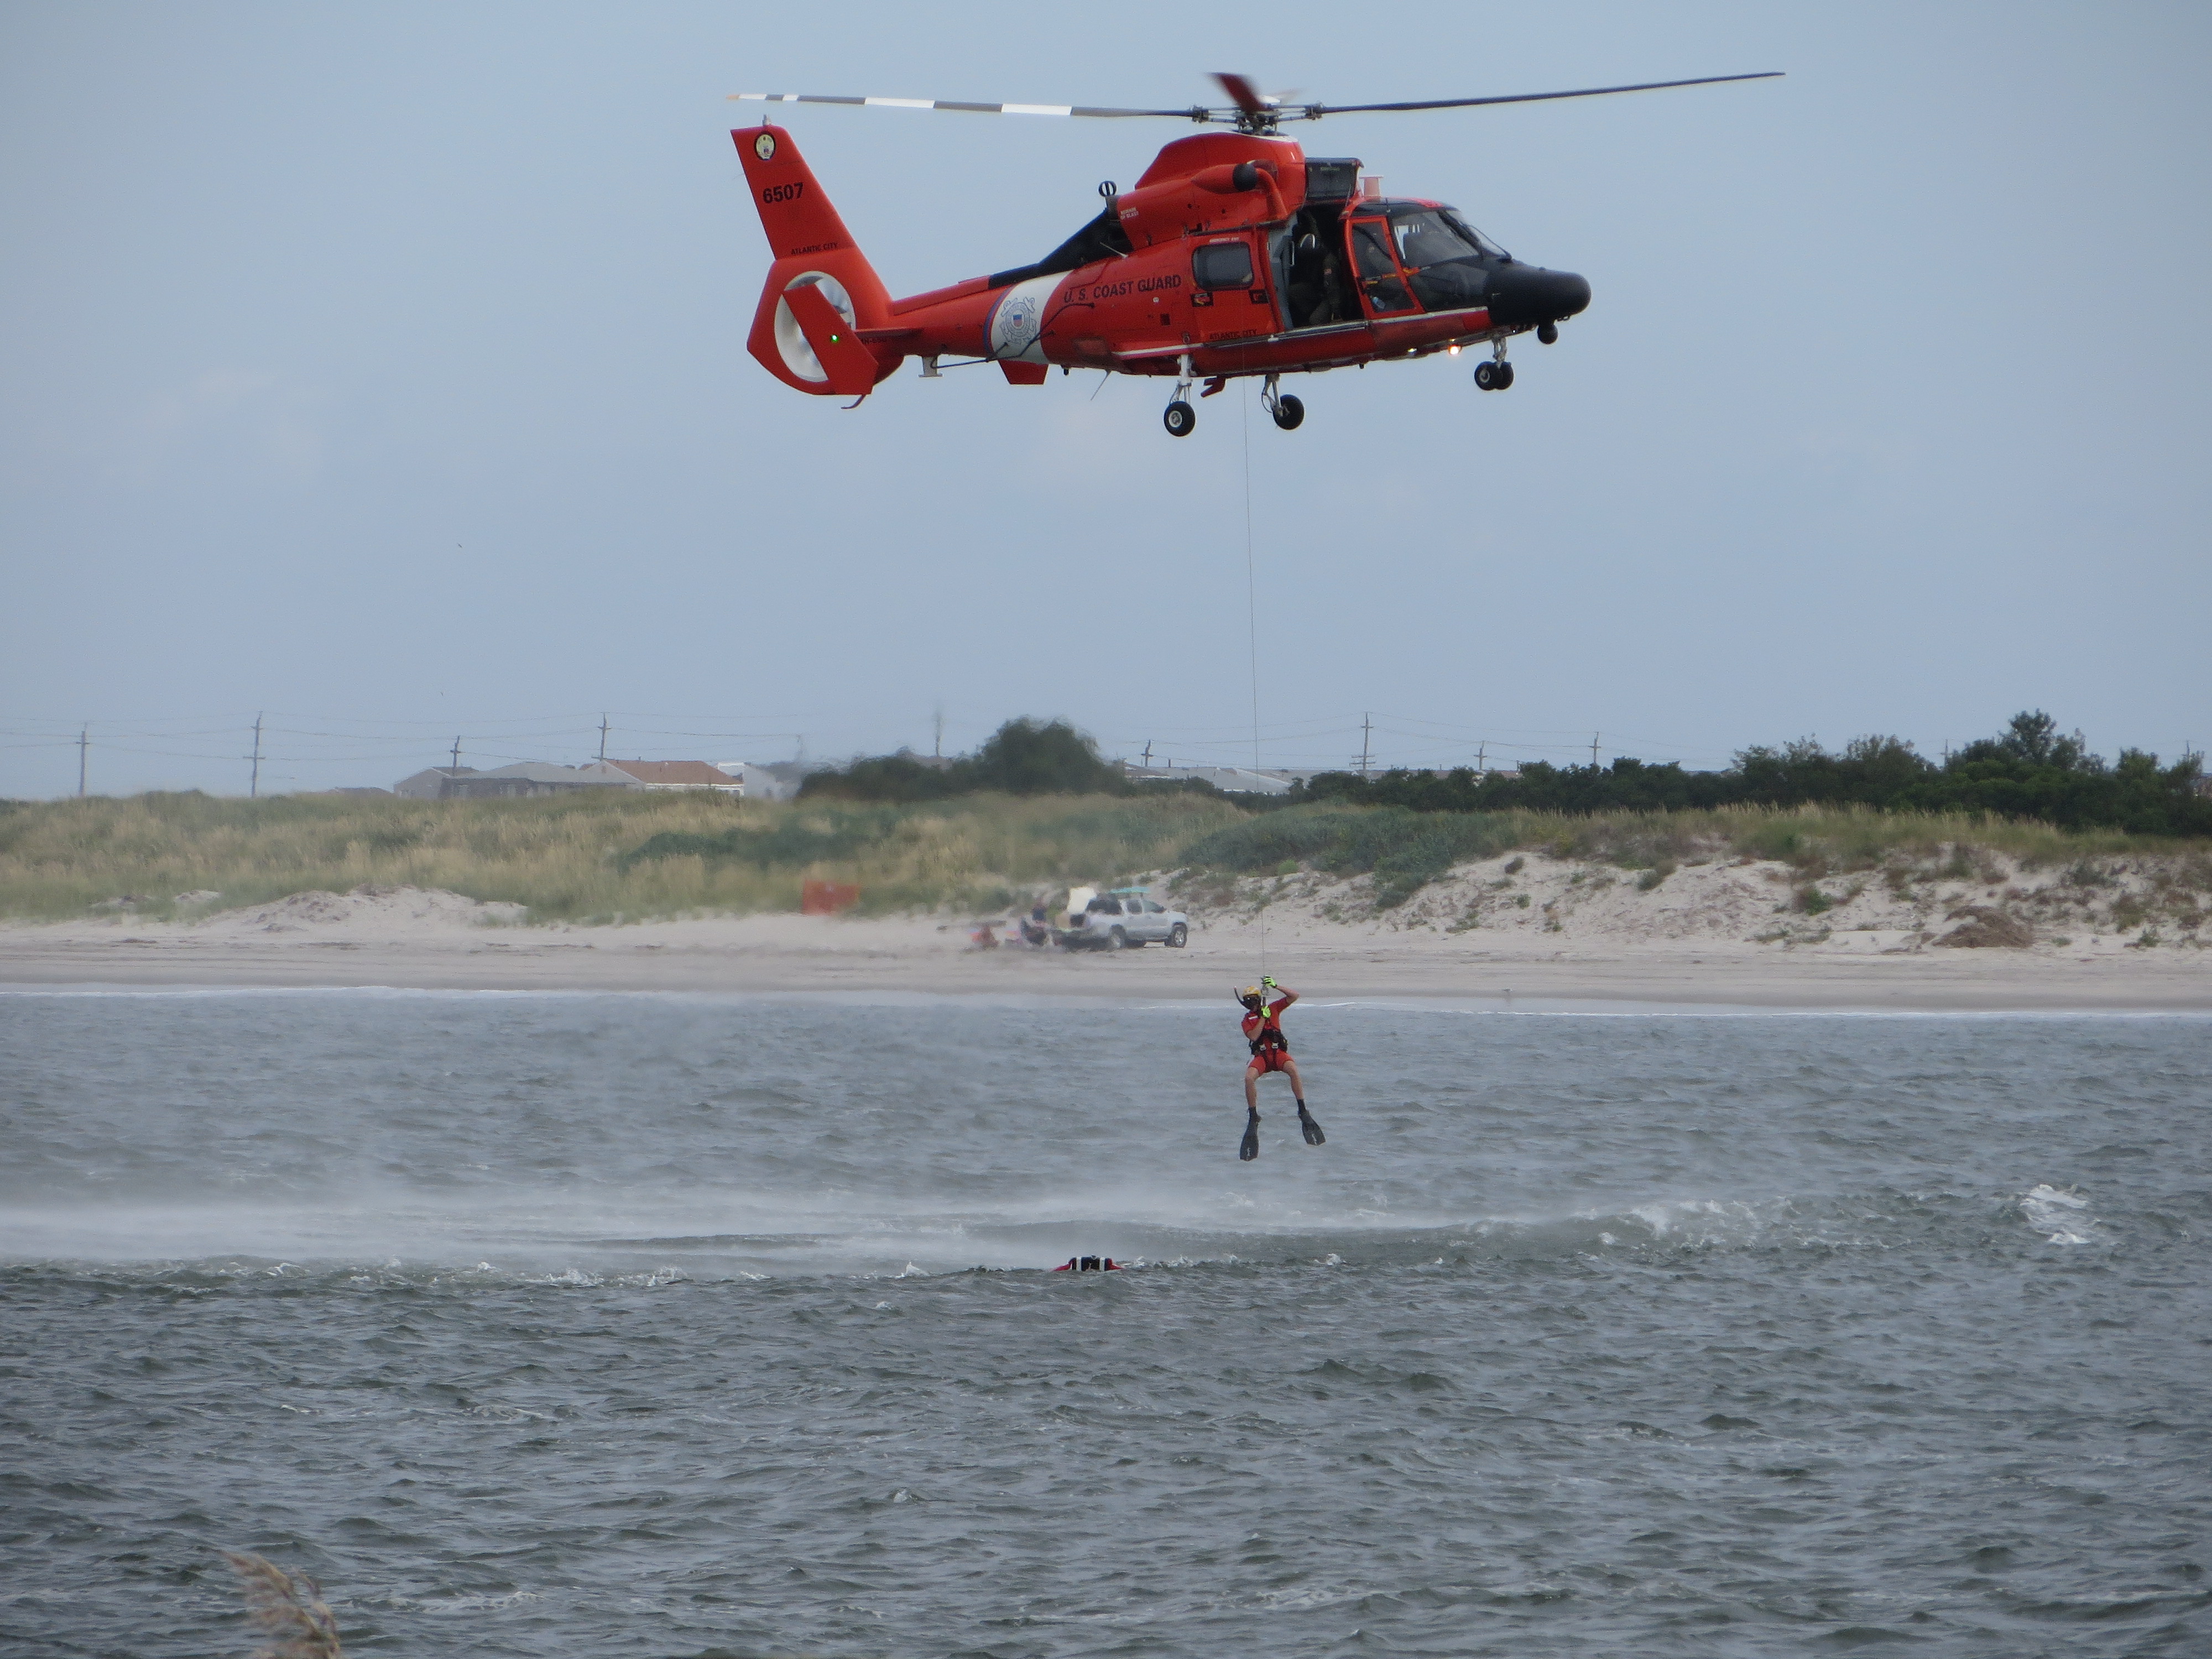 Coast Guard training exercizes in rough seas